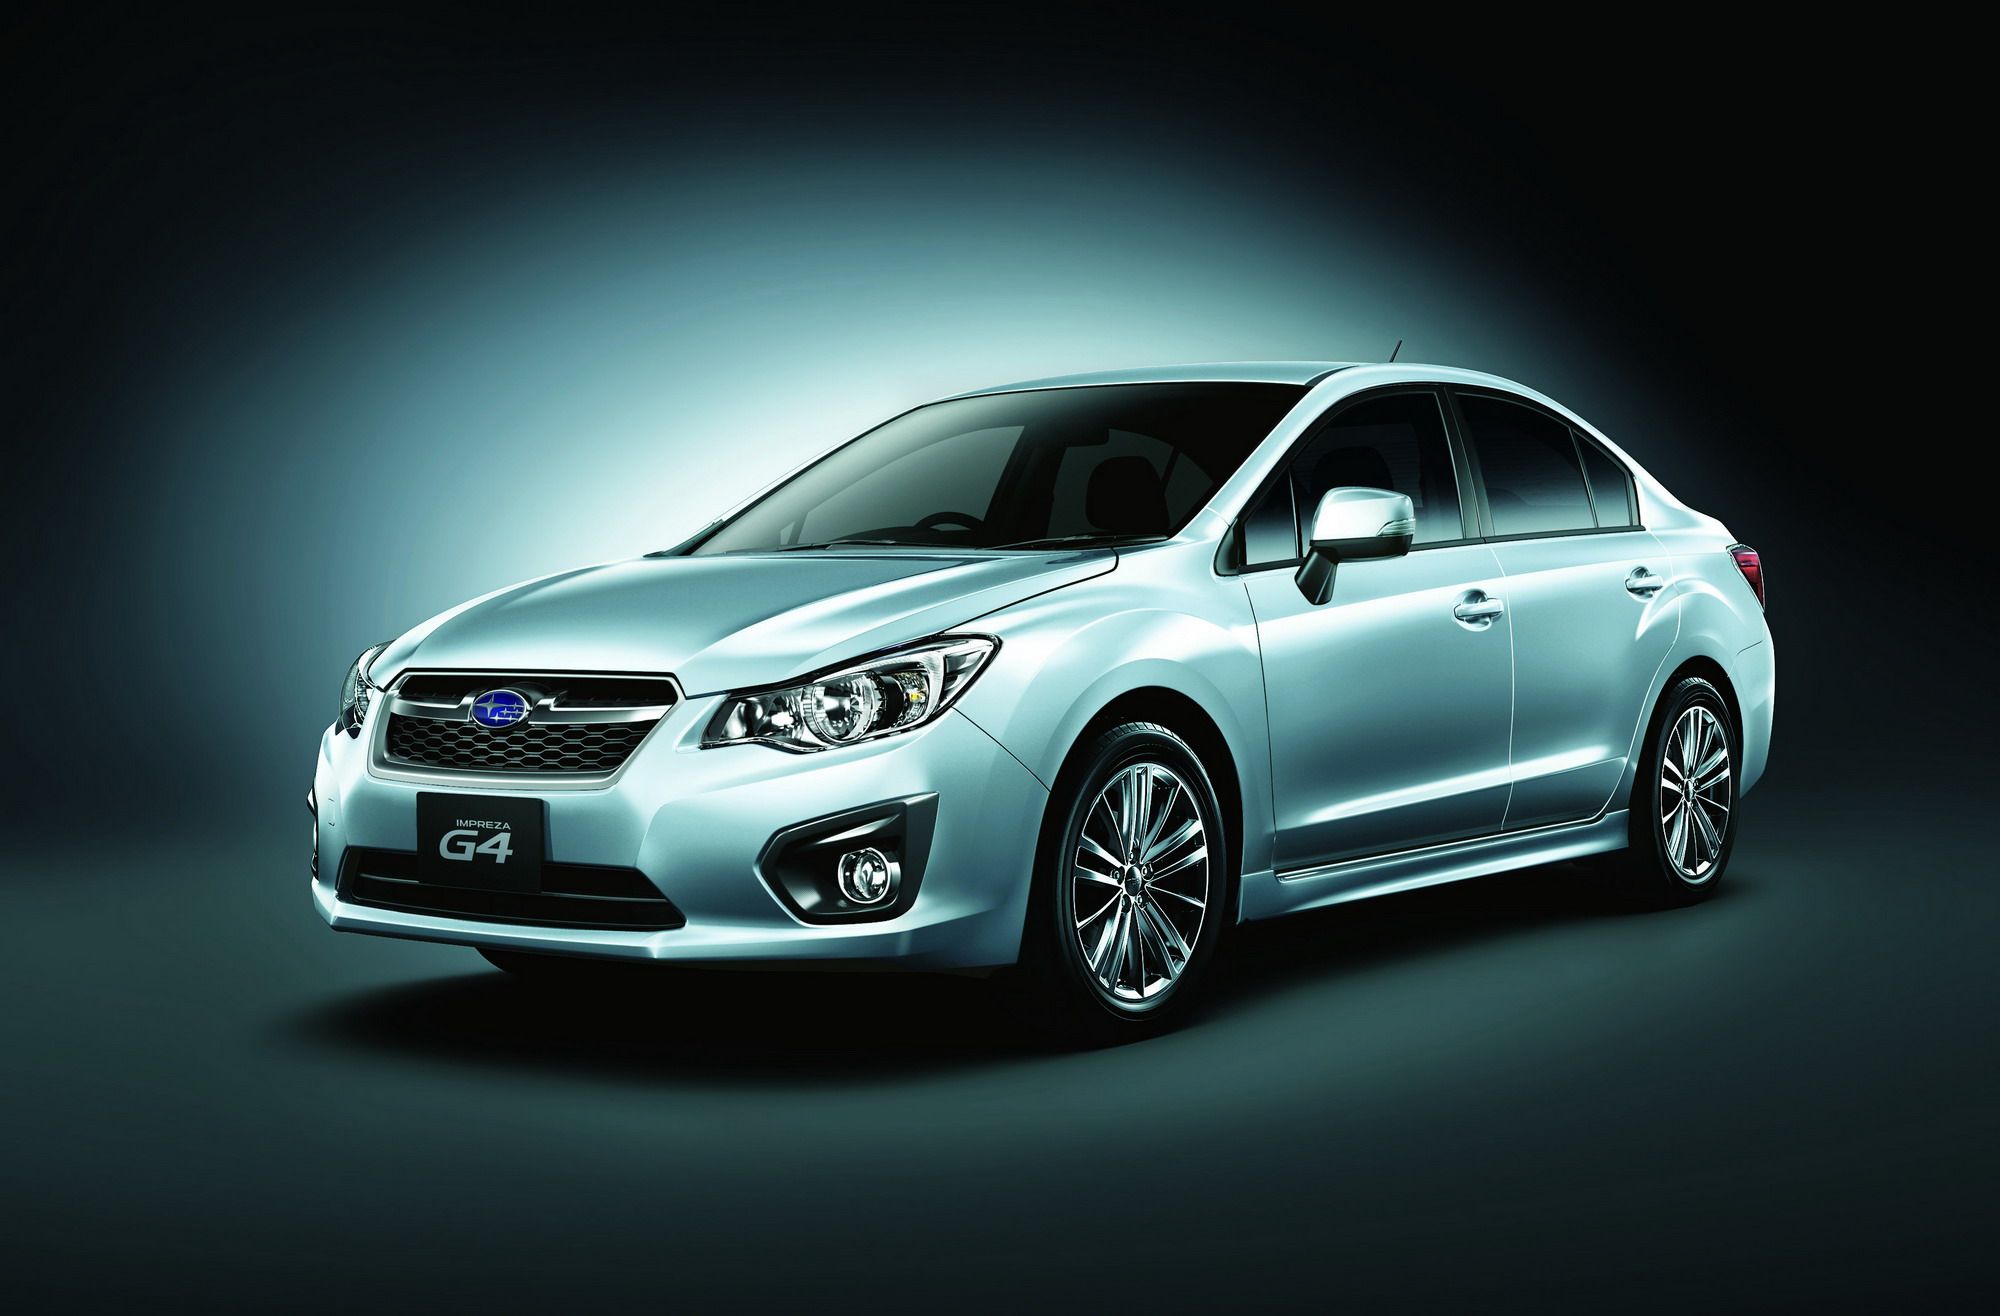 2012 Subaru Impreza Sport and G4